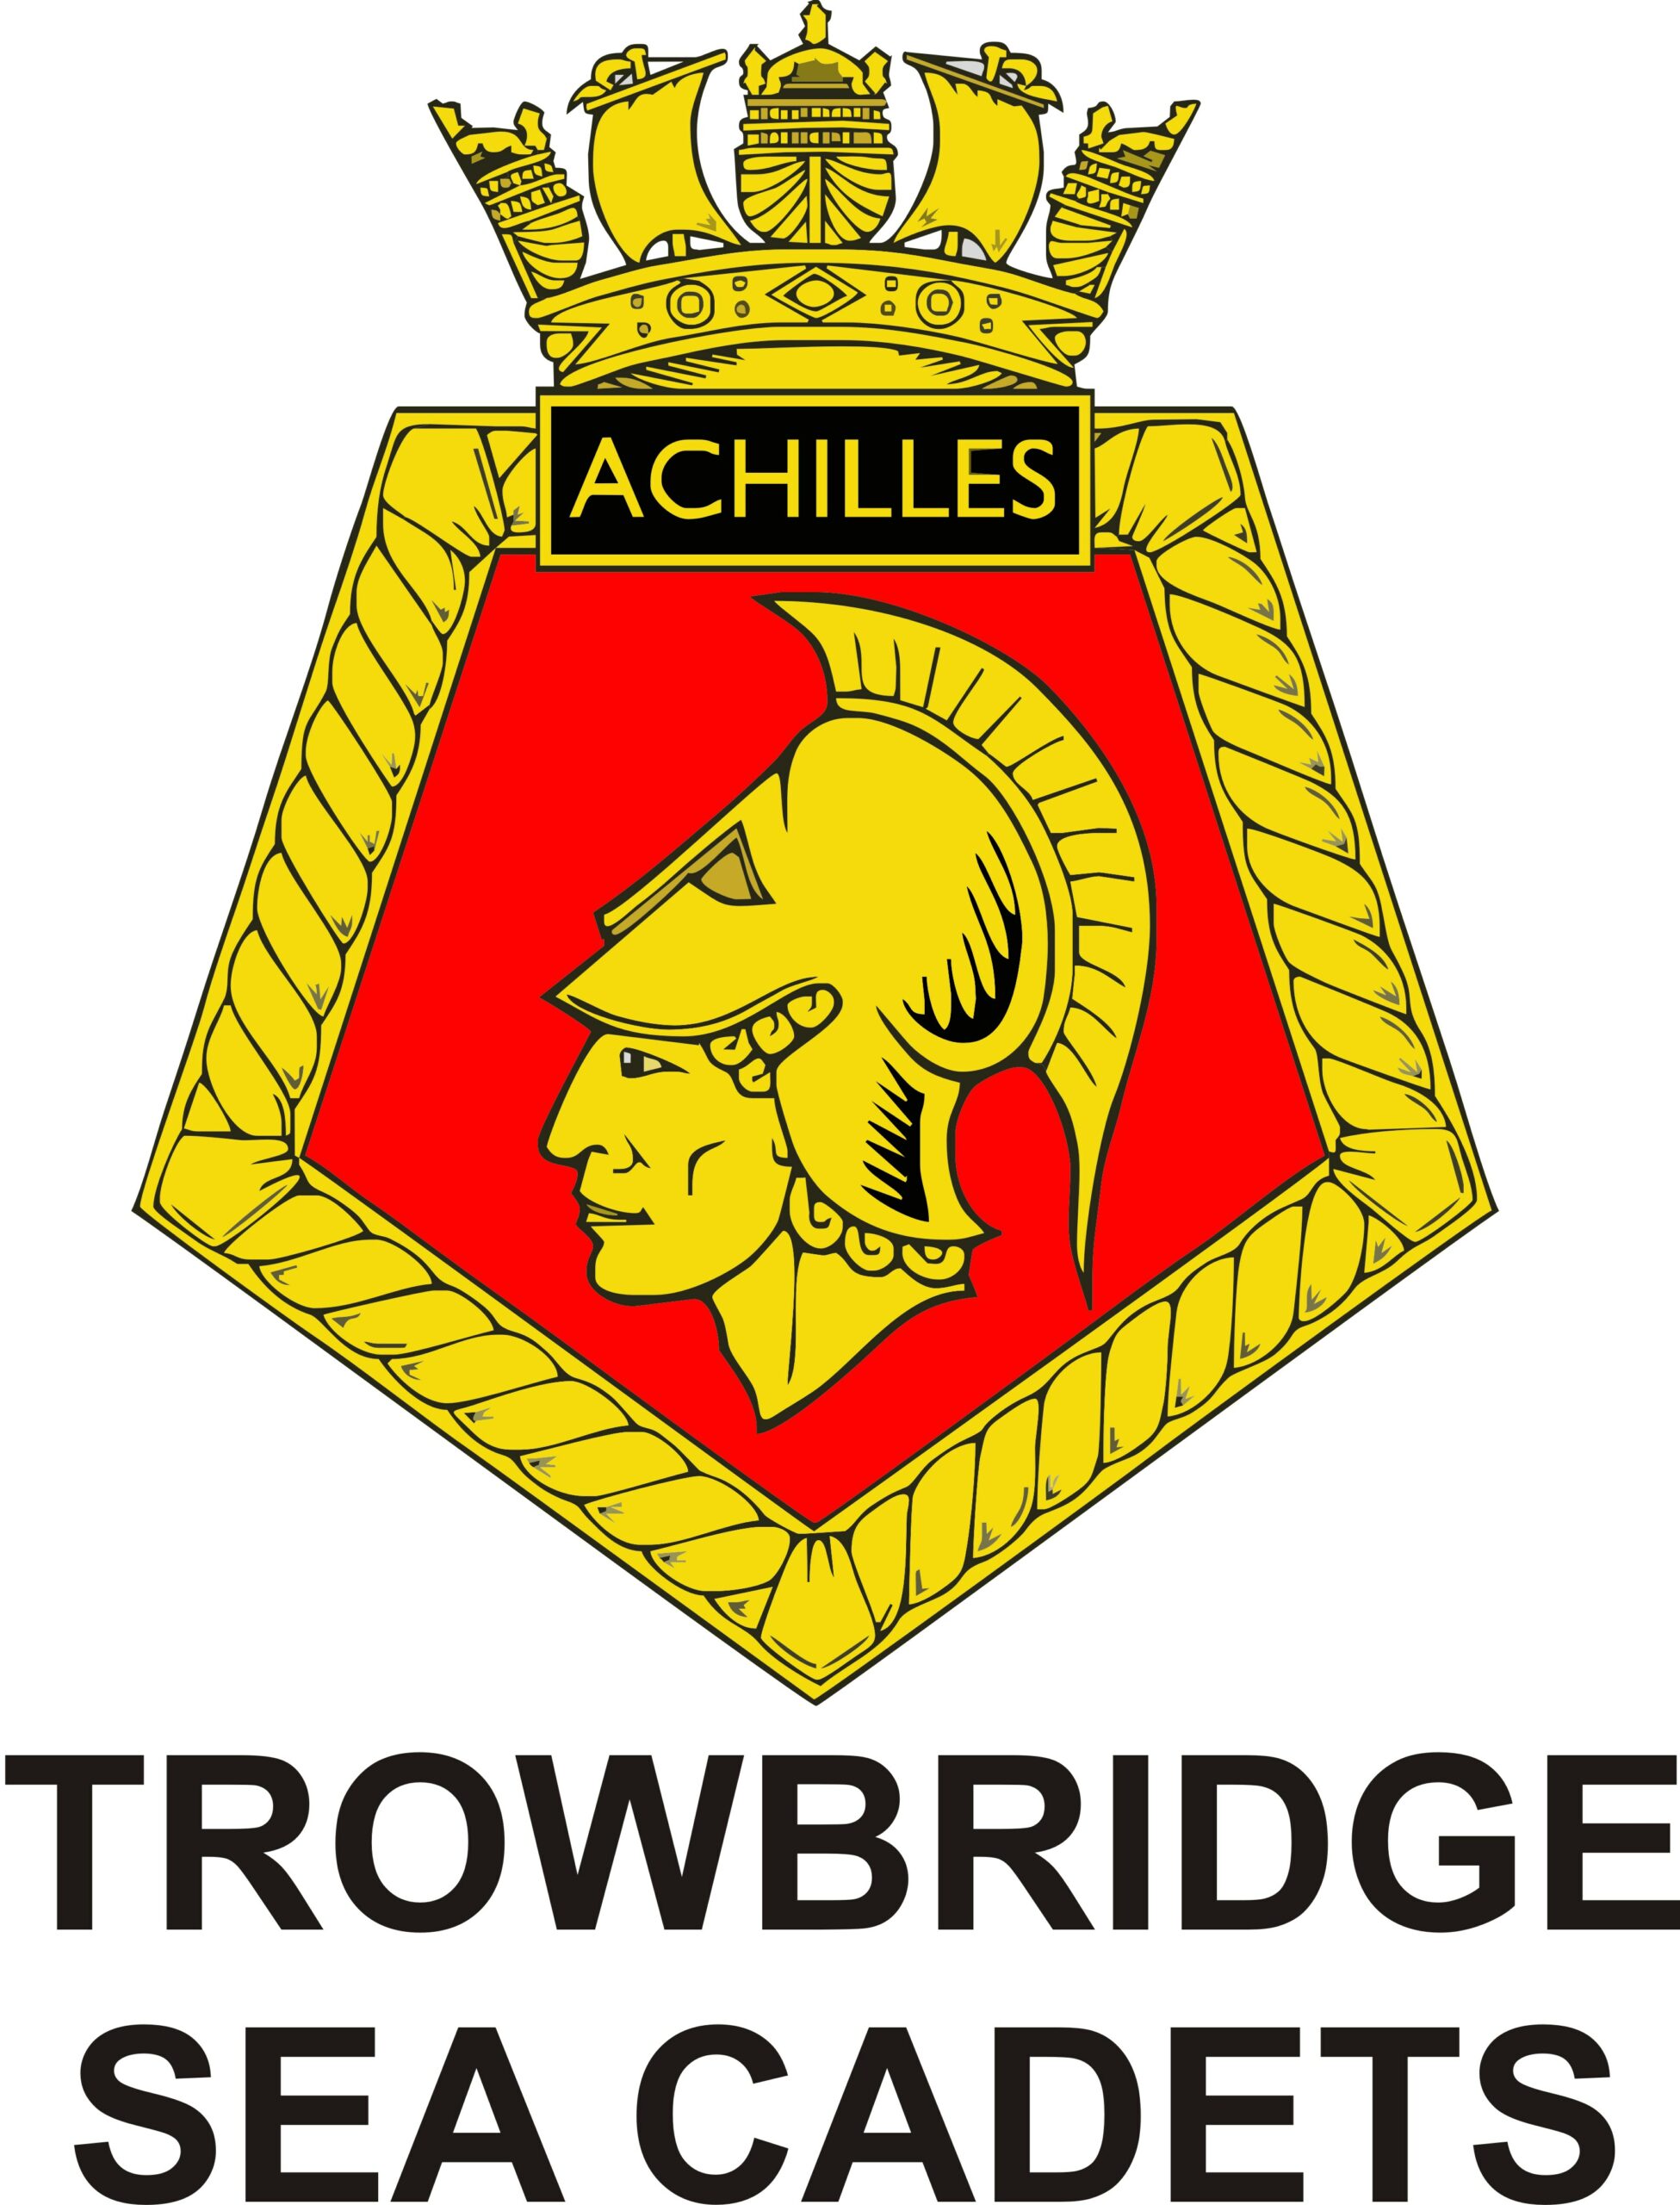 Trowbridge Sea Cadets